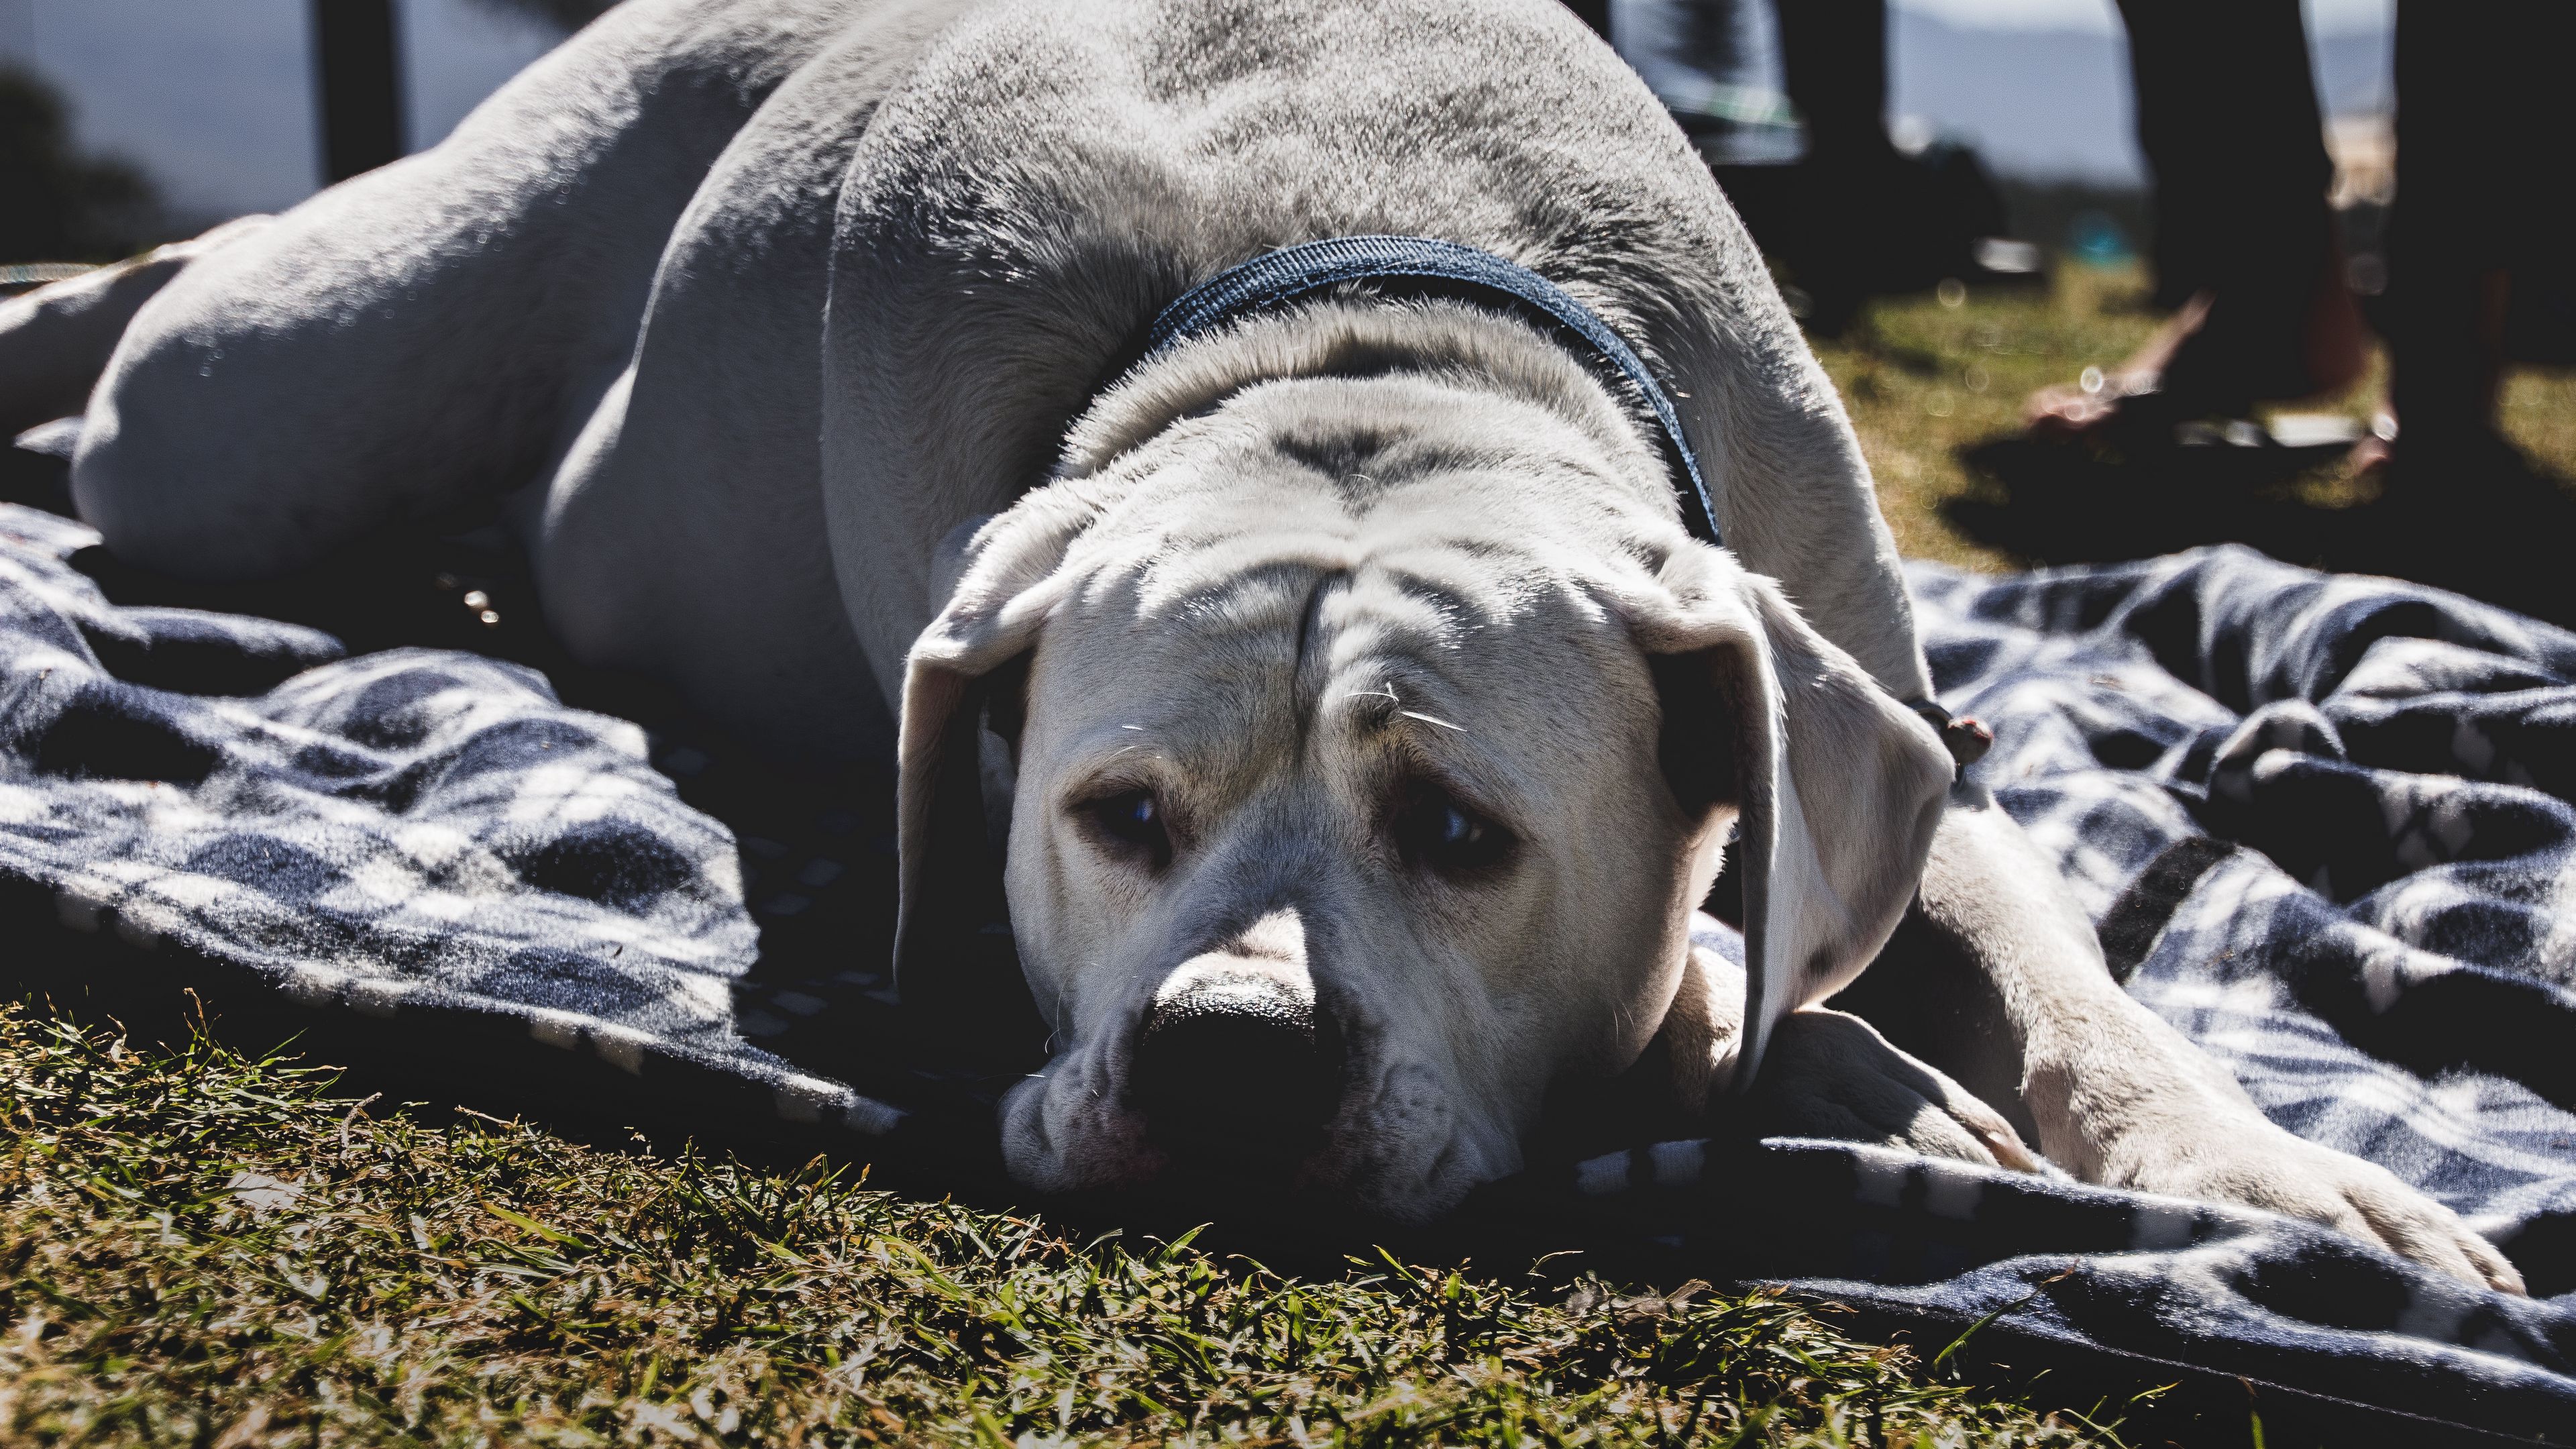 Labrador - fond d'écran chien.jpg